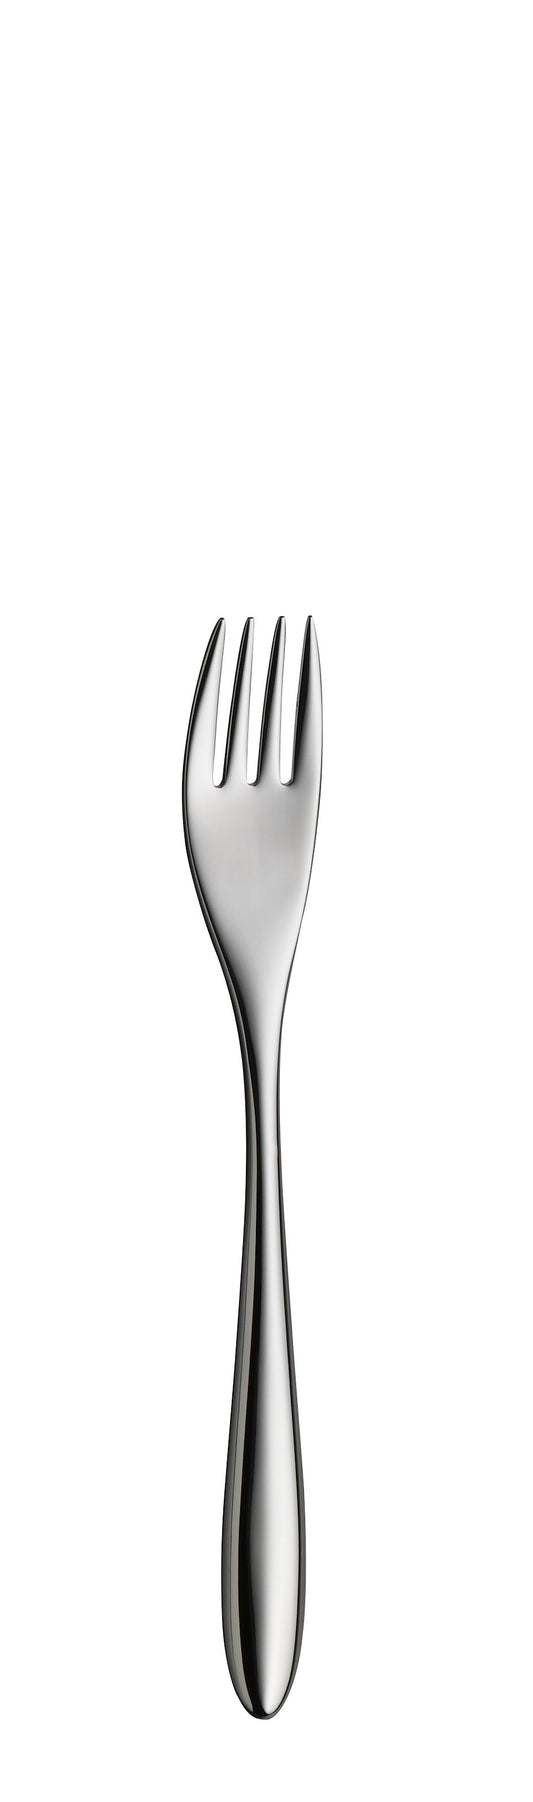 Dessert fork AVES silver plated 160mm